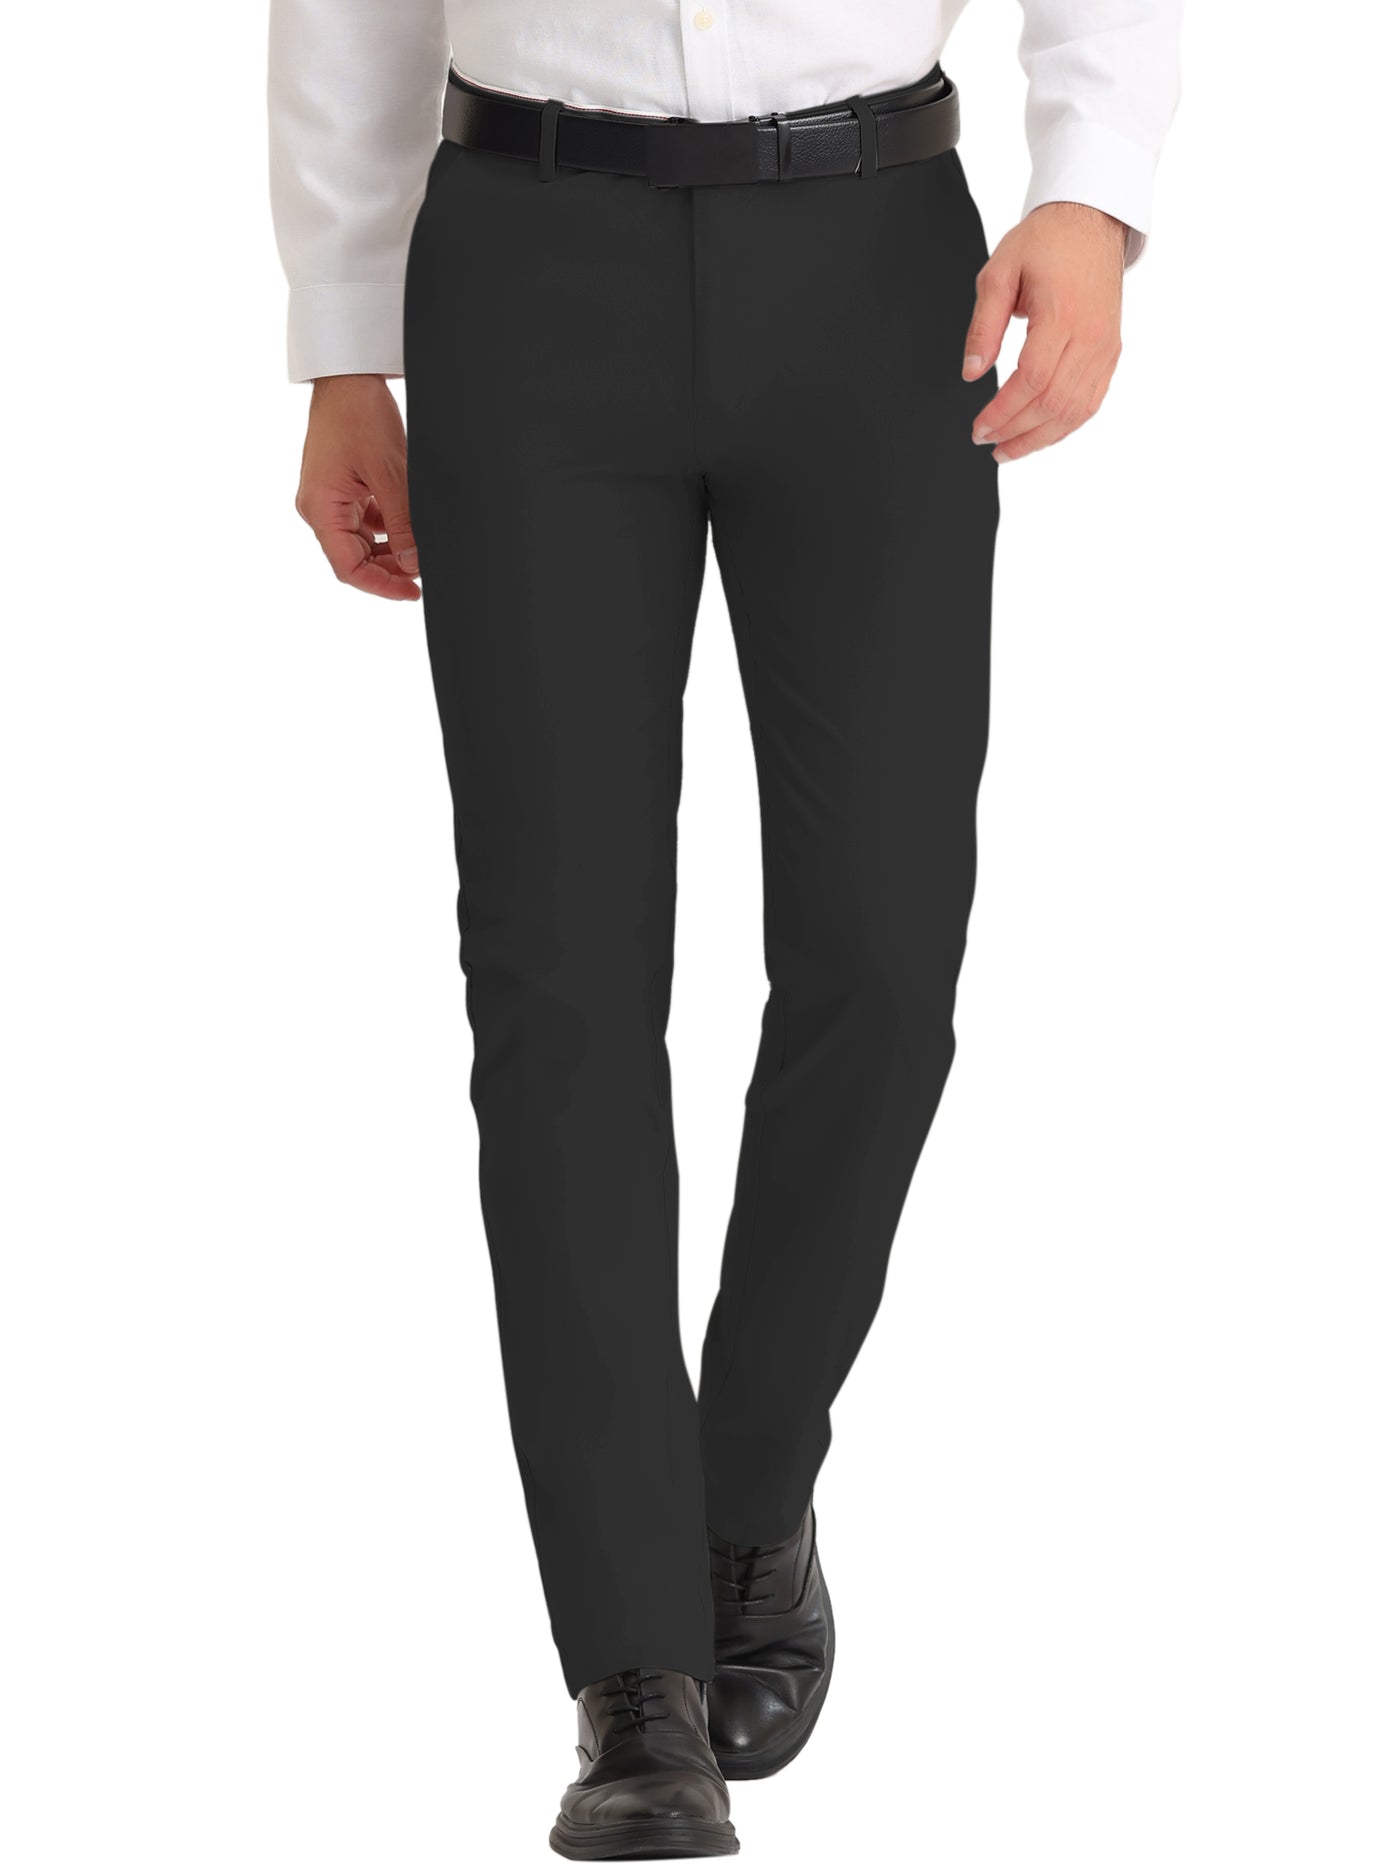 Bublédon Men's Suit Pants Slim Fit Flat Front Stretch Chino Business Dress Trousers